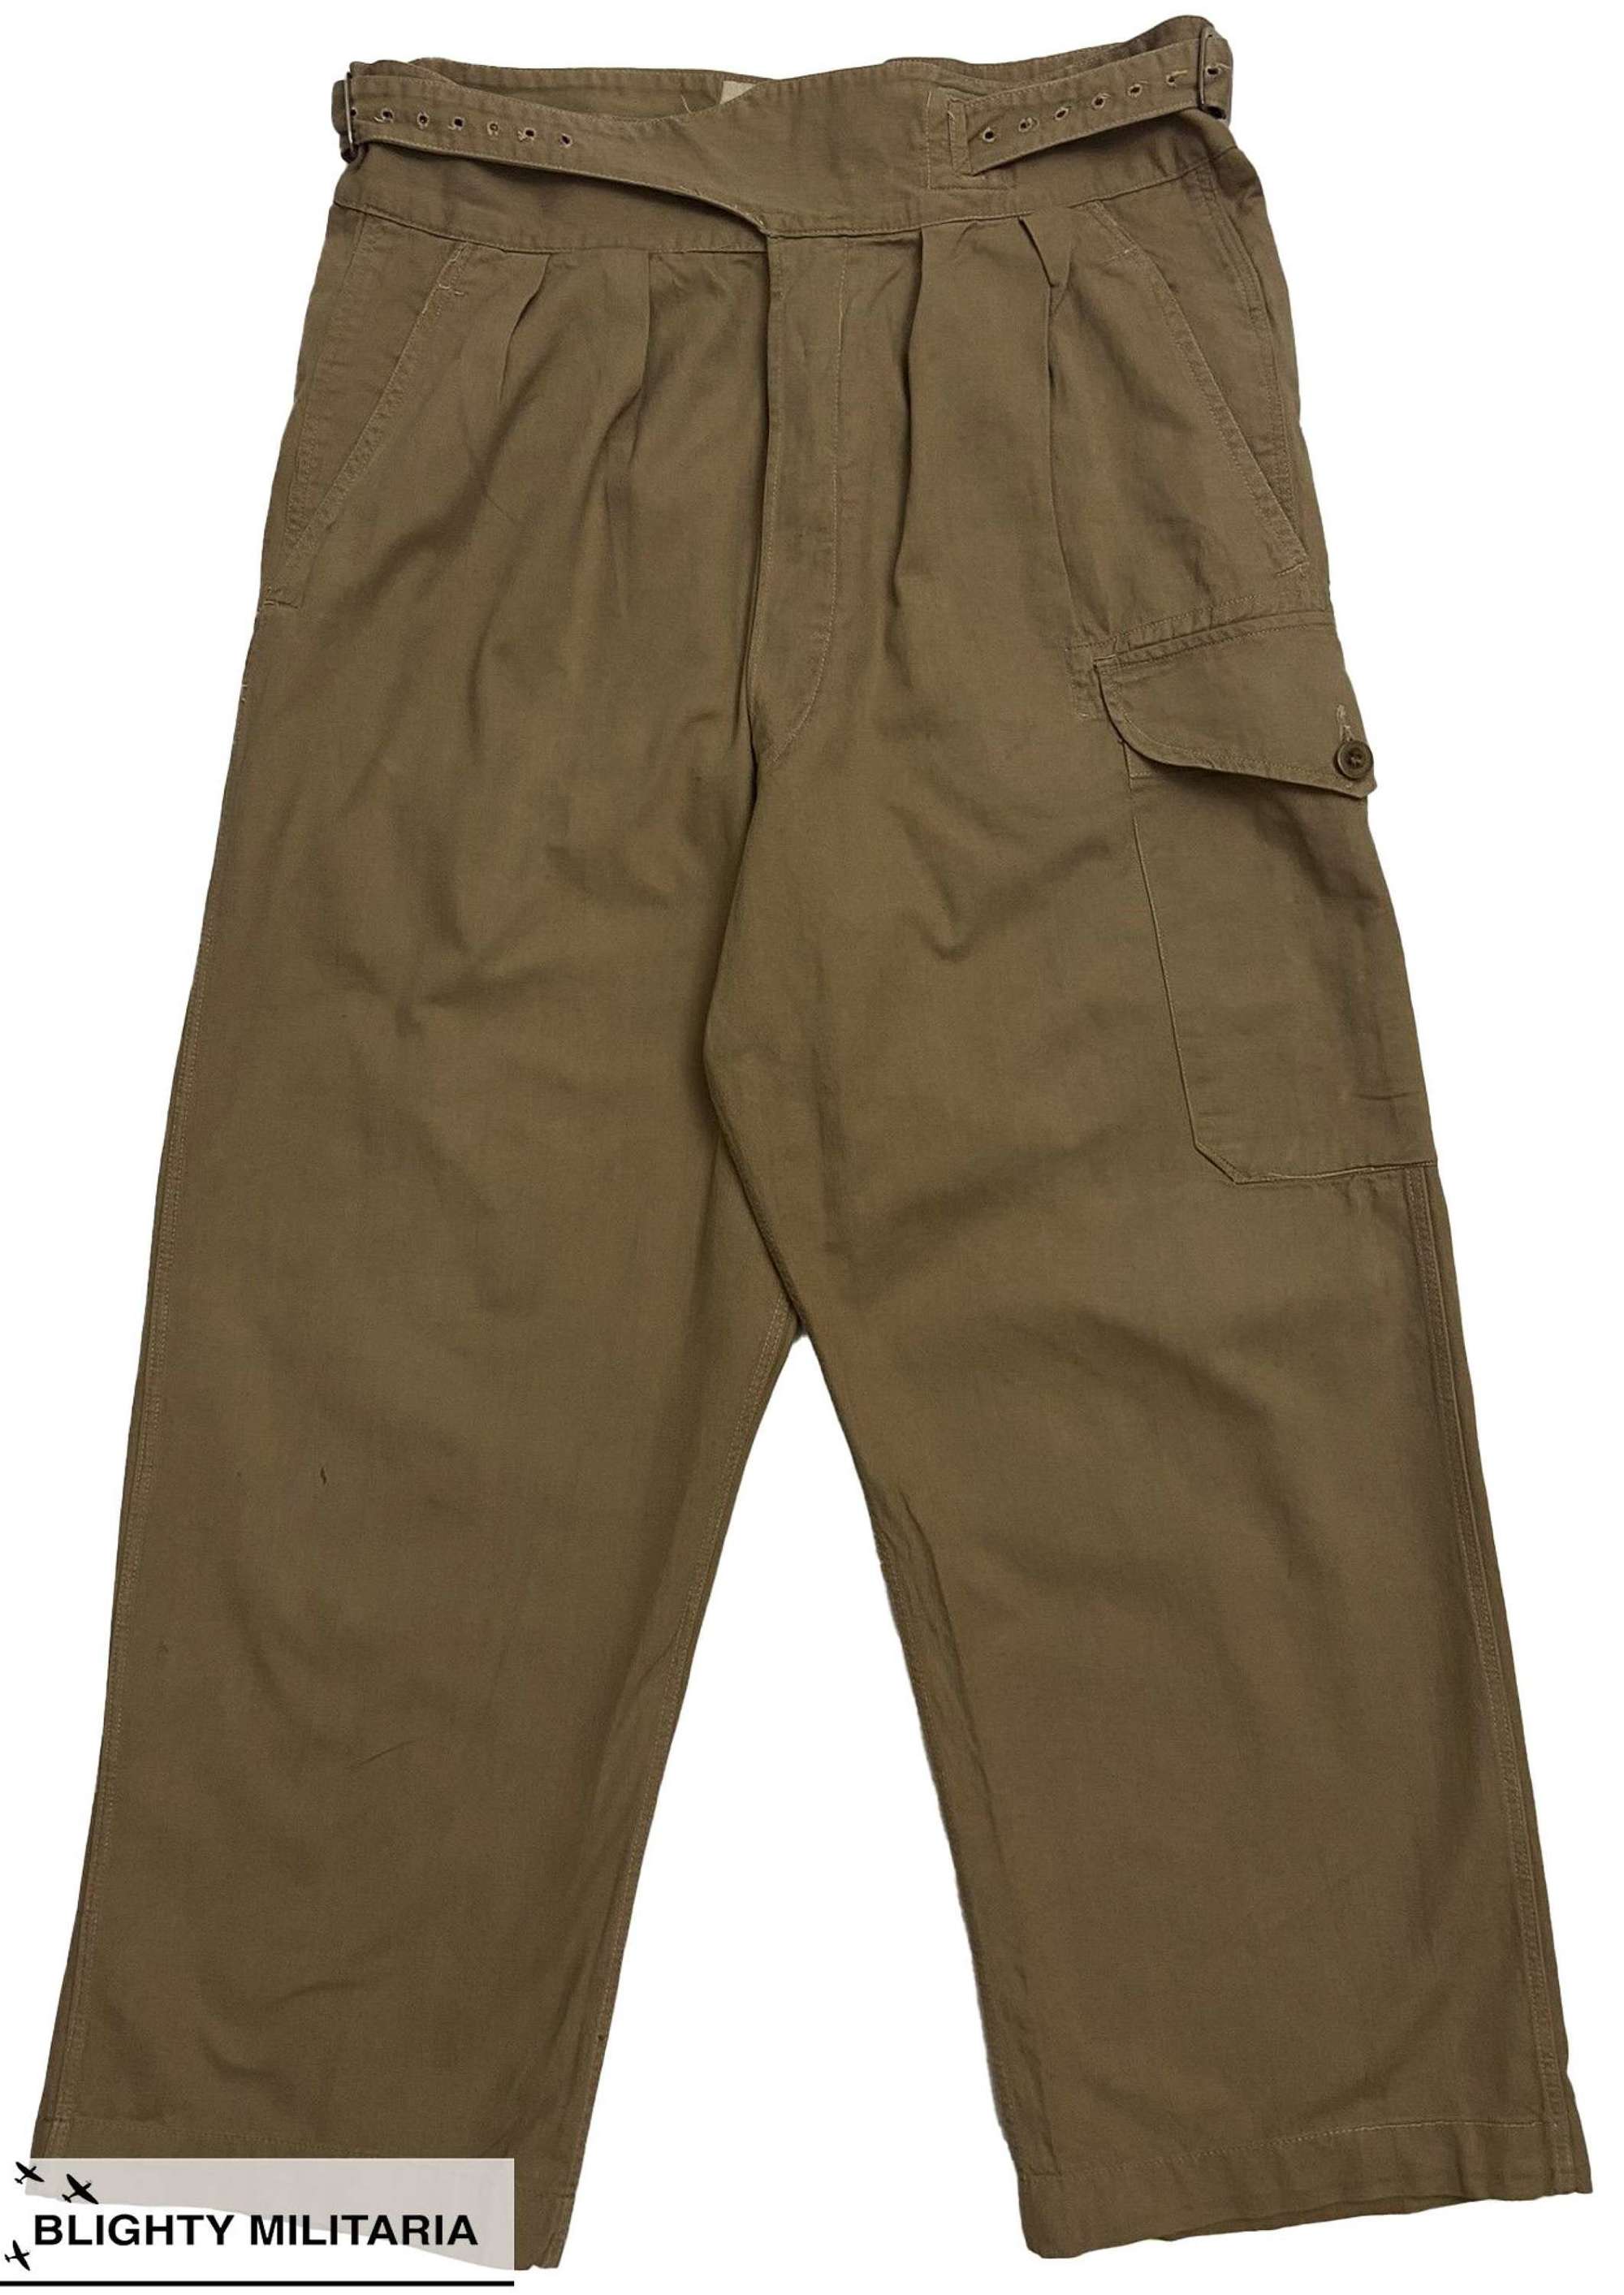 Original 1950s British Army 1950 Pattern Khaki Drill Trousers Size 10